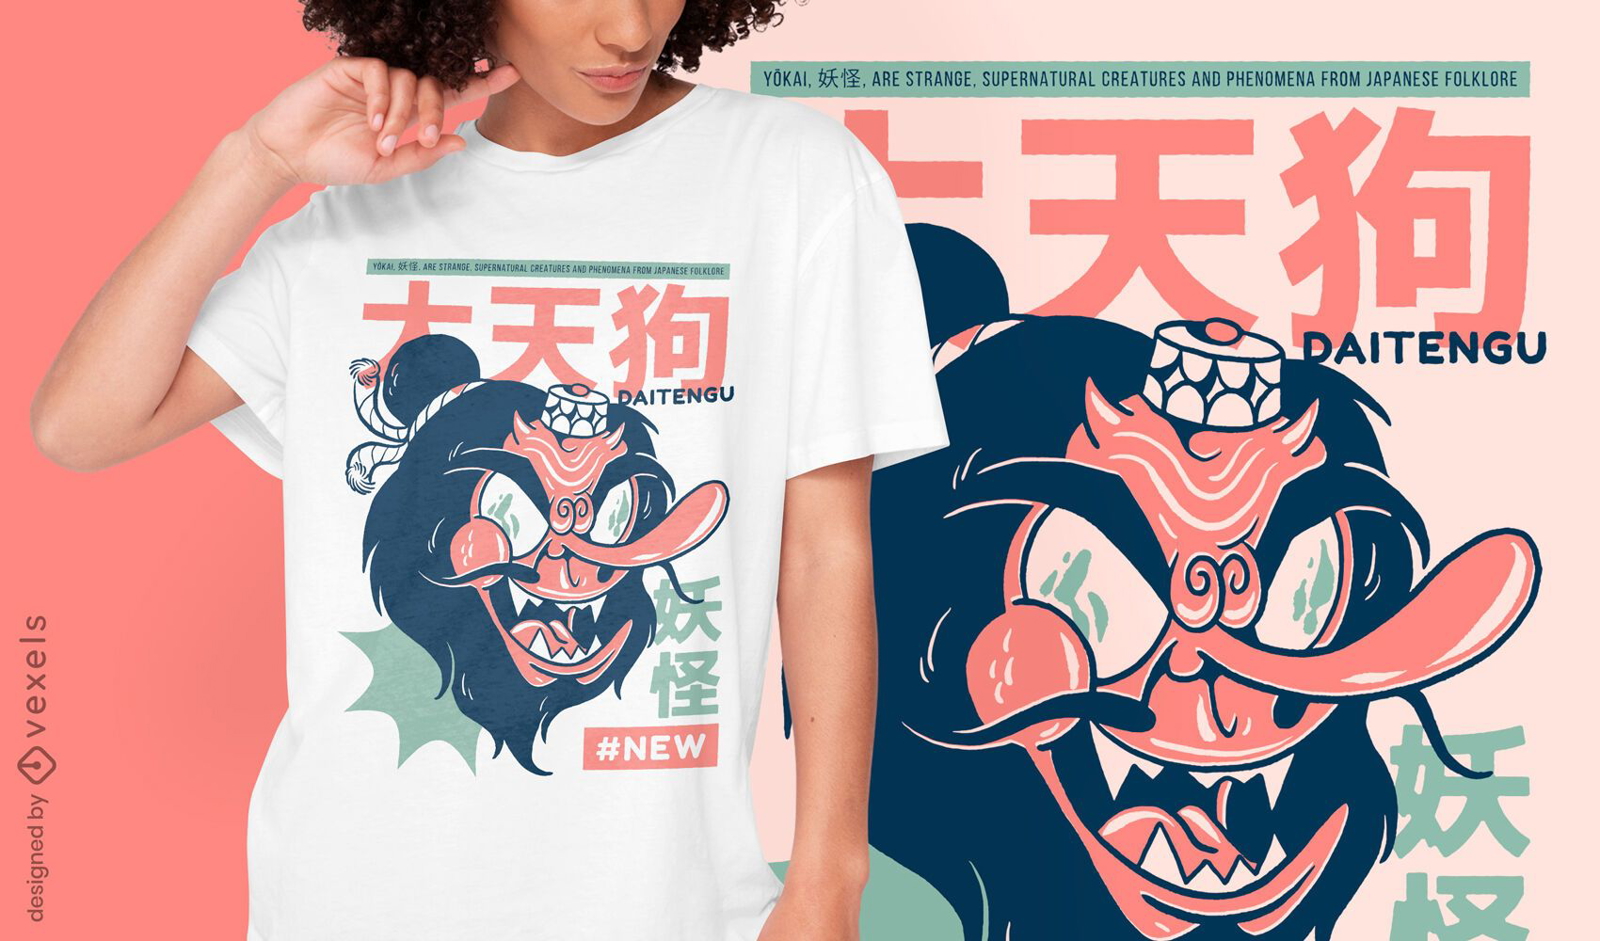 Daitengu japanisches Yokai T-Shirt Design